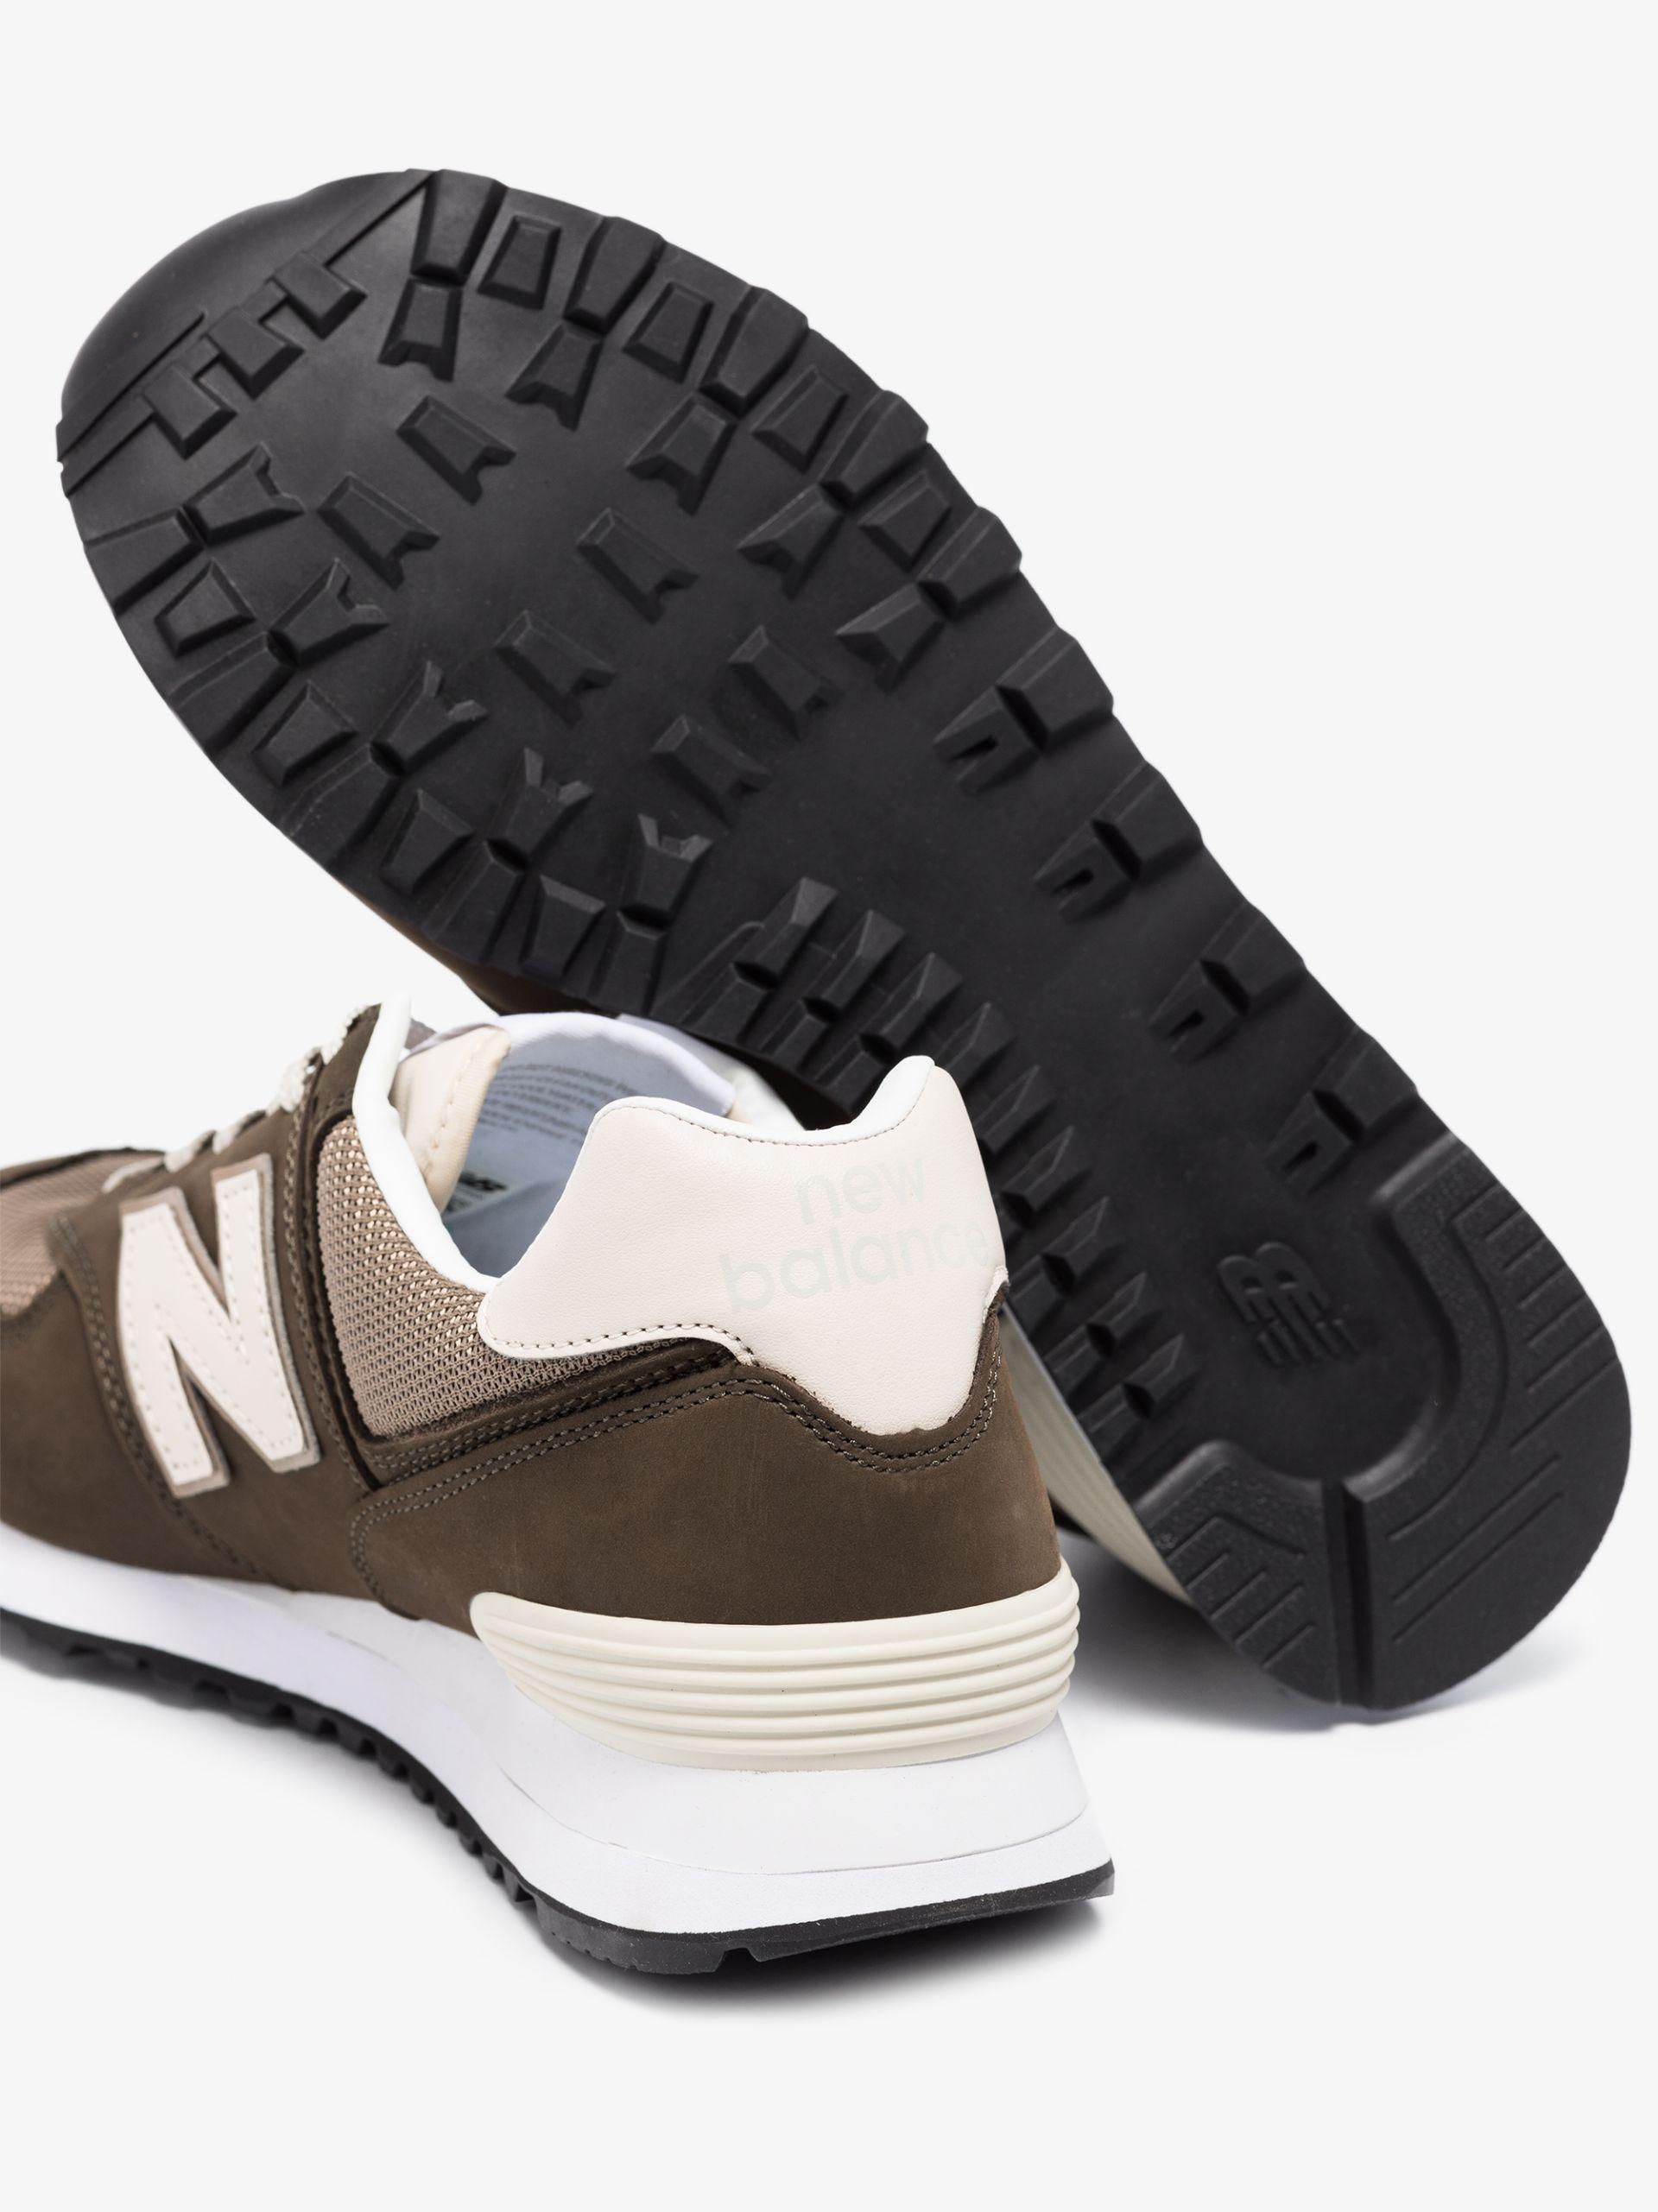 New Balance Suede 574 Nubuck Sneakers in Brown | Lyst